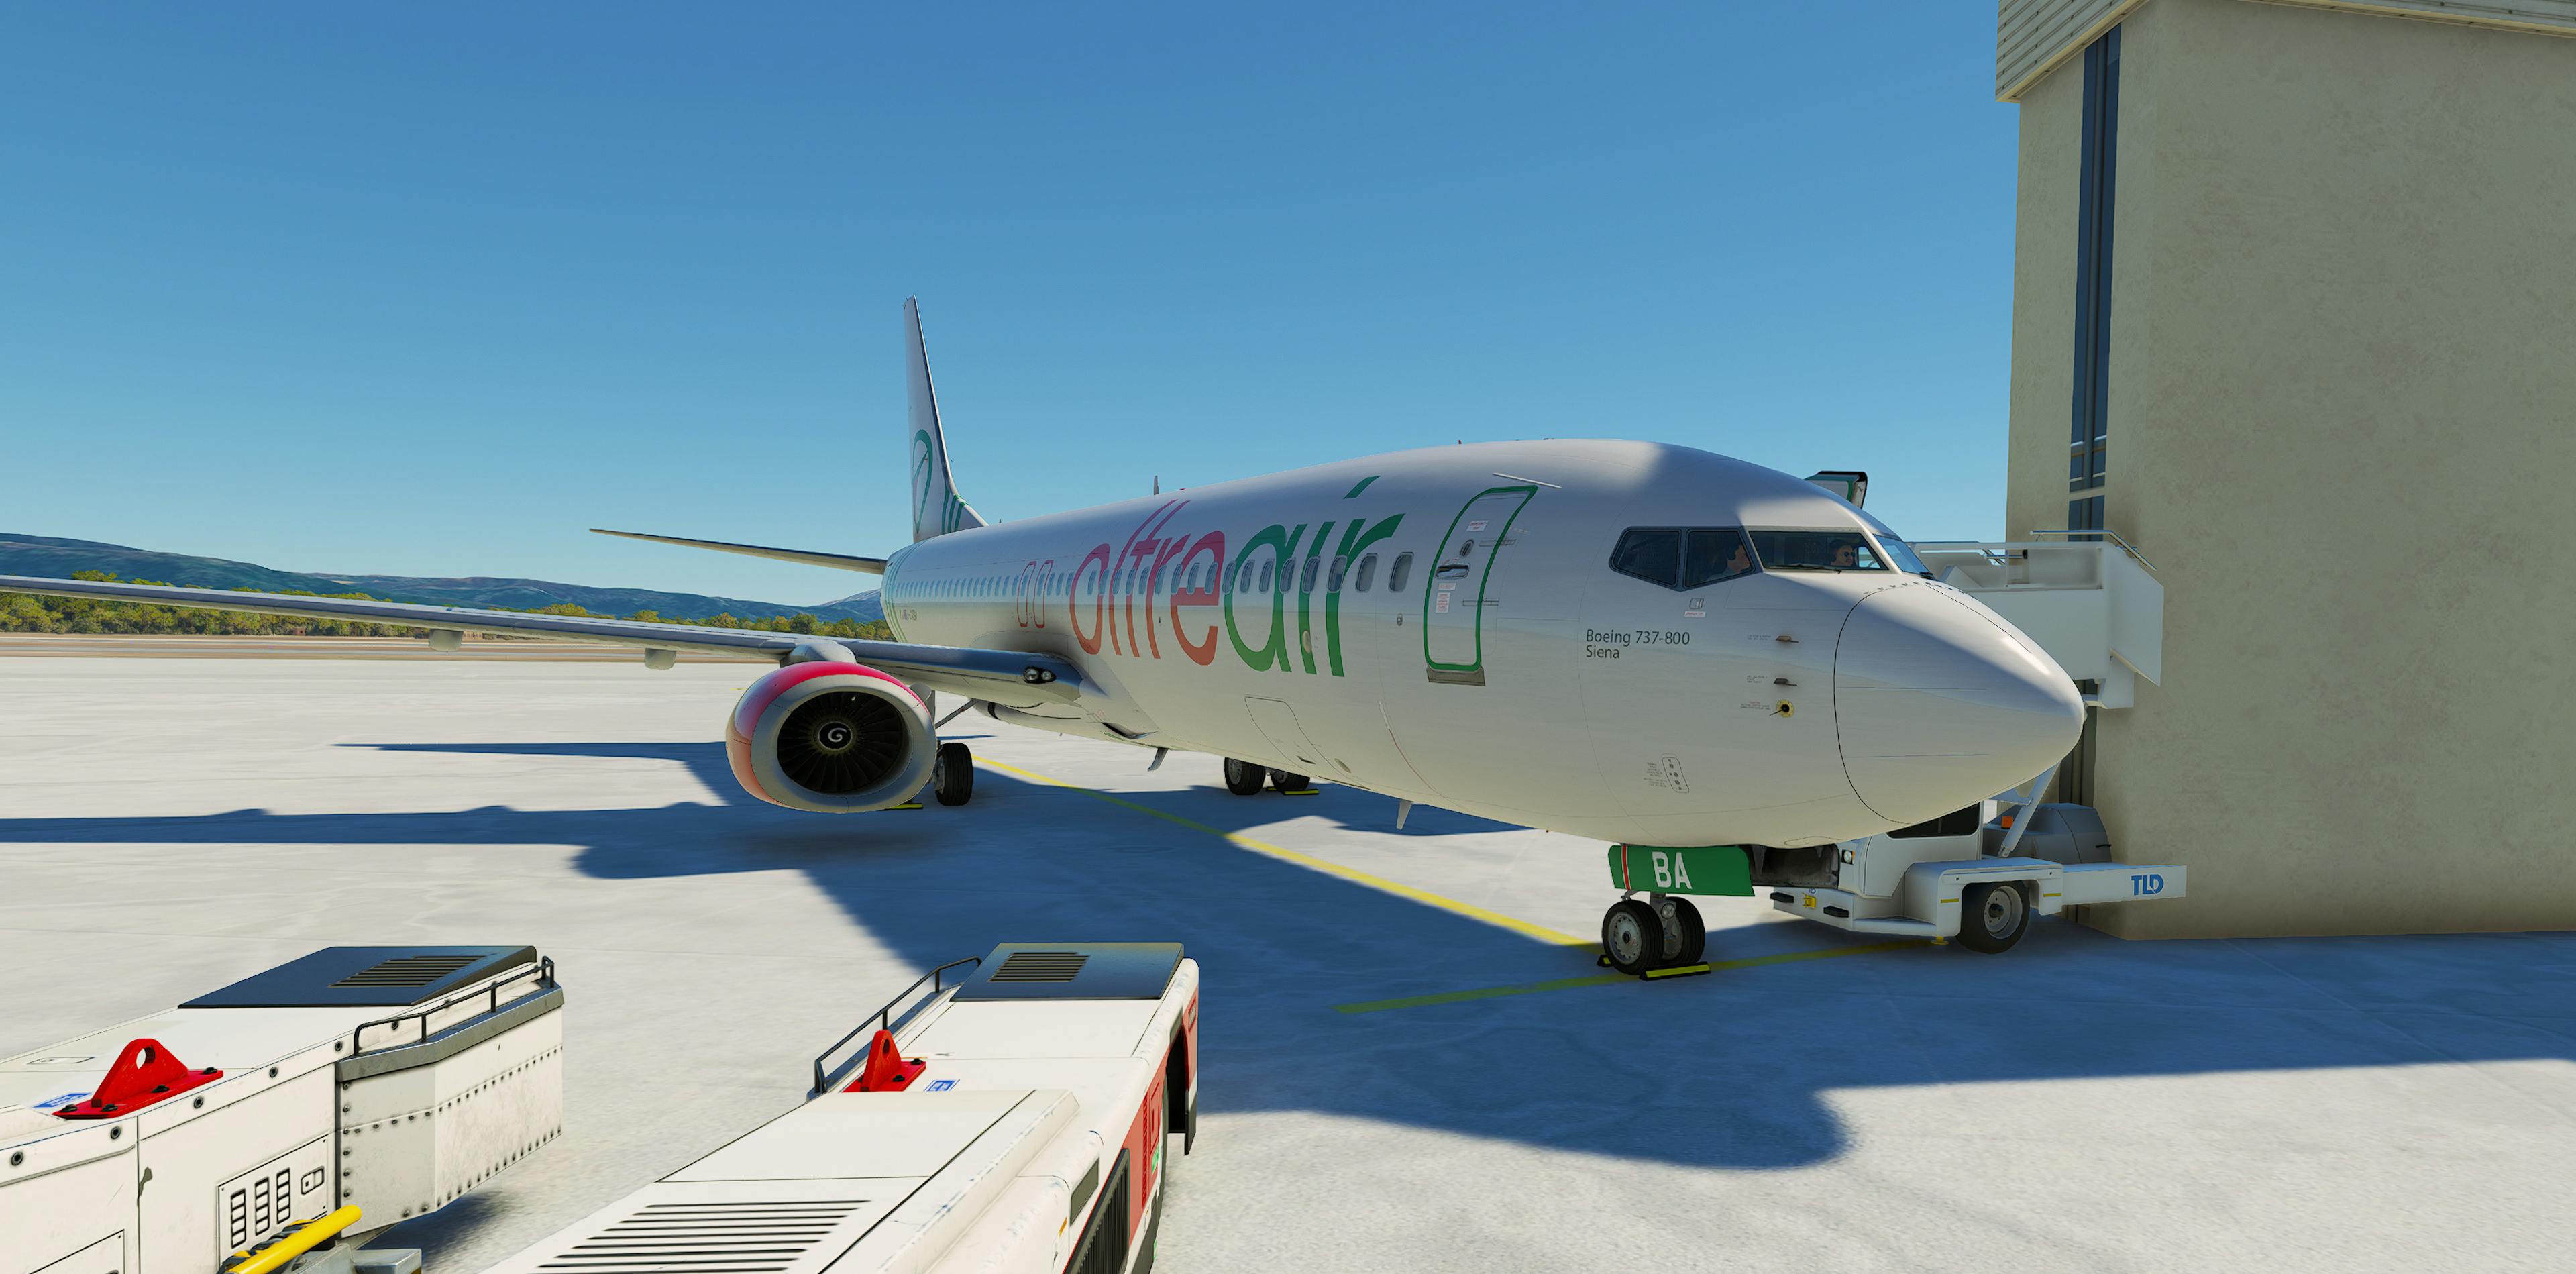 Oltreair Boeing 737-800 at Olbia Airport